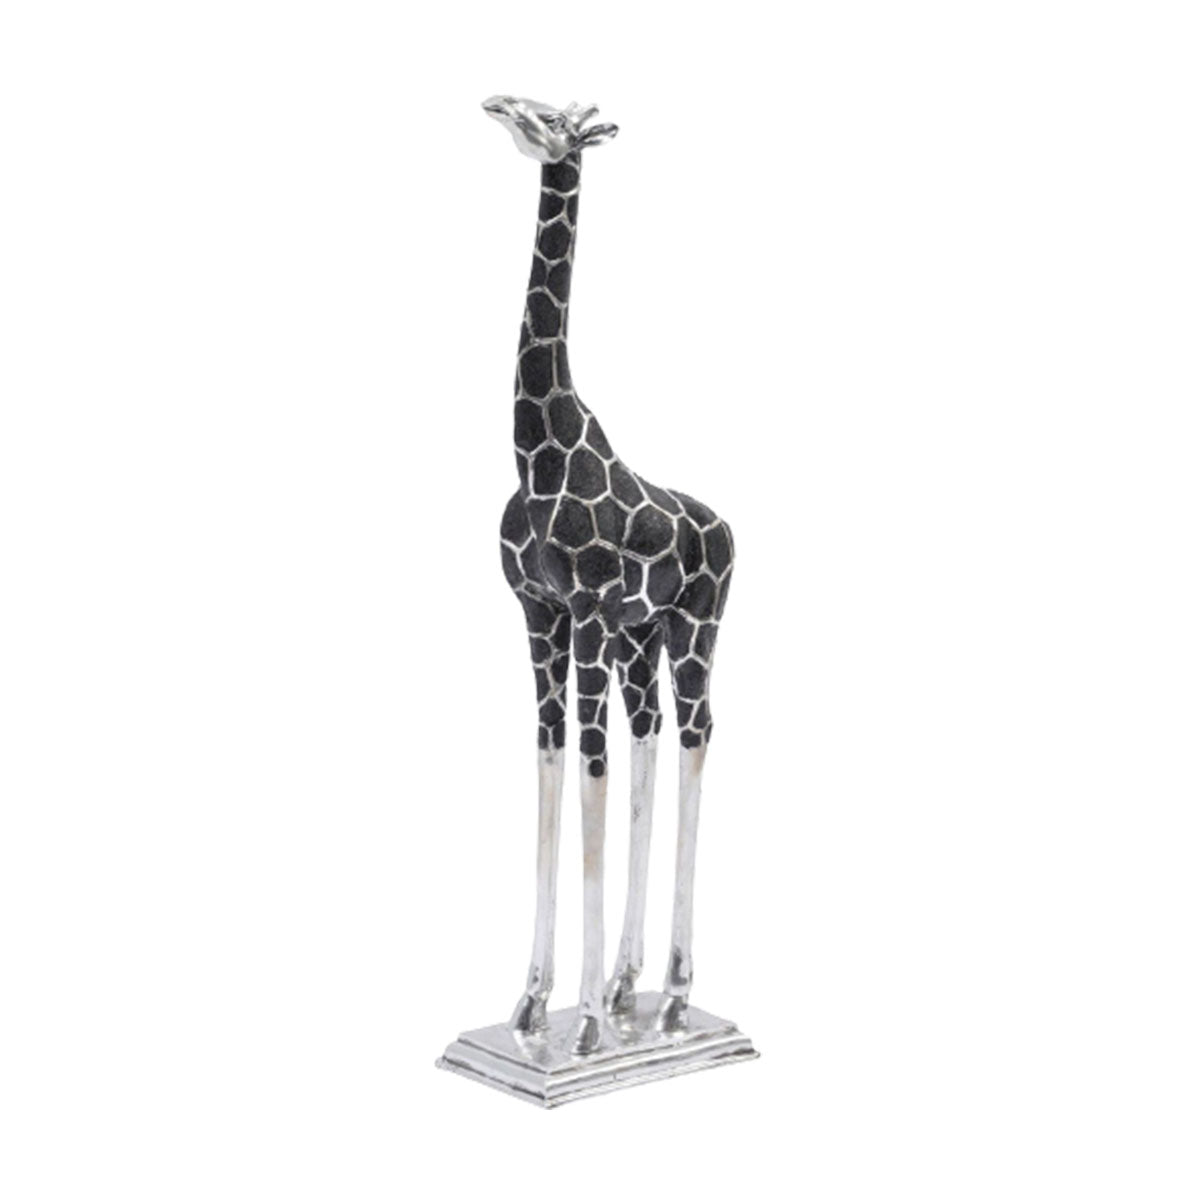 Giant Giraffe Sculpture Head Forward